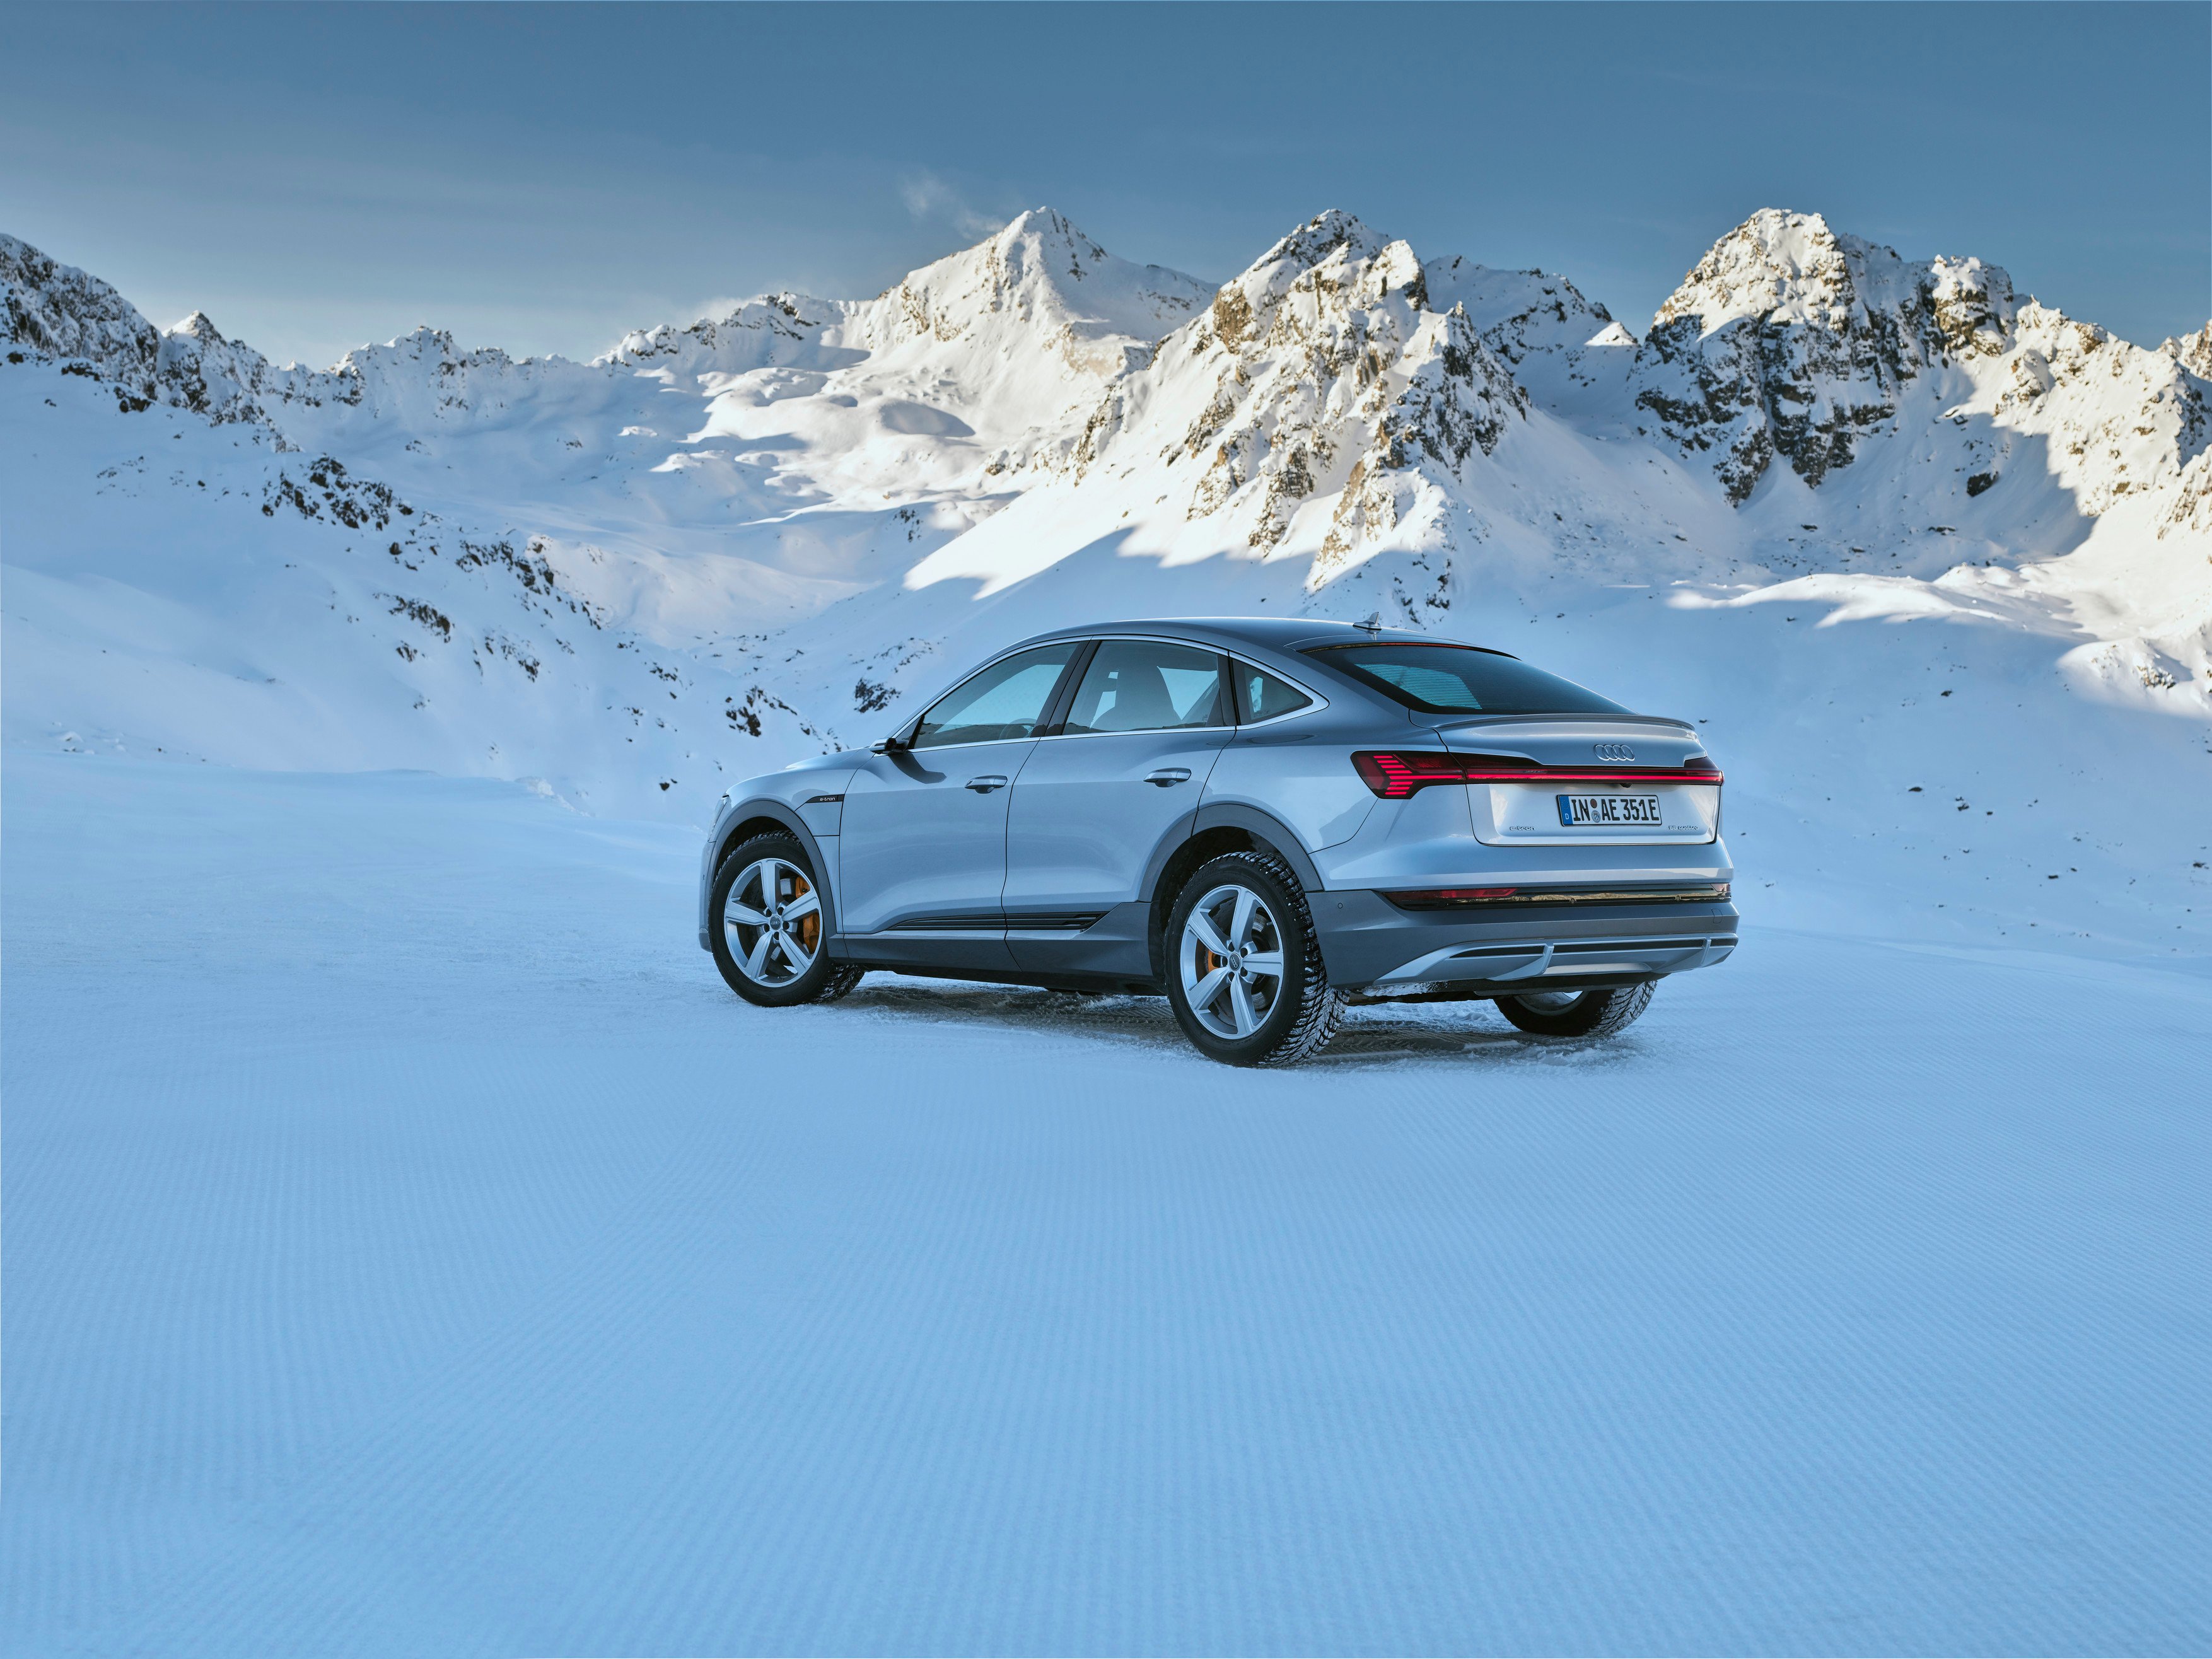 Audi e-tron sportback na snegu, v ozadju zasnežene gore